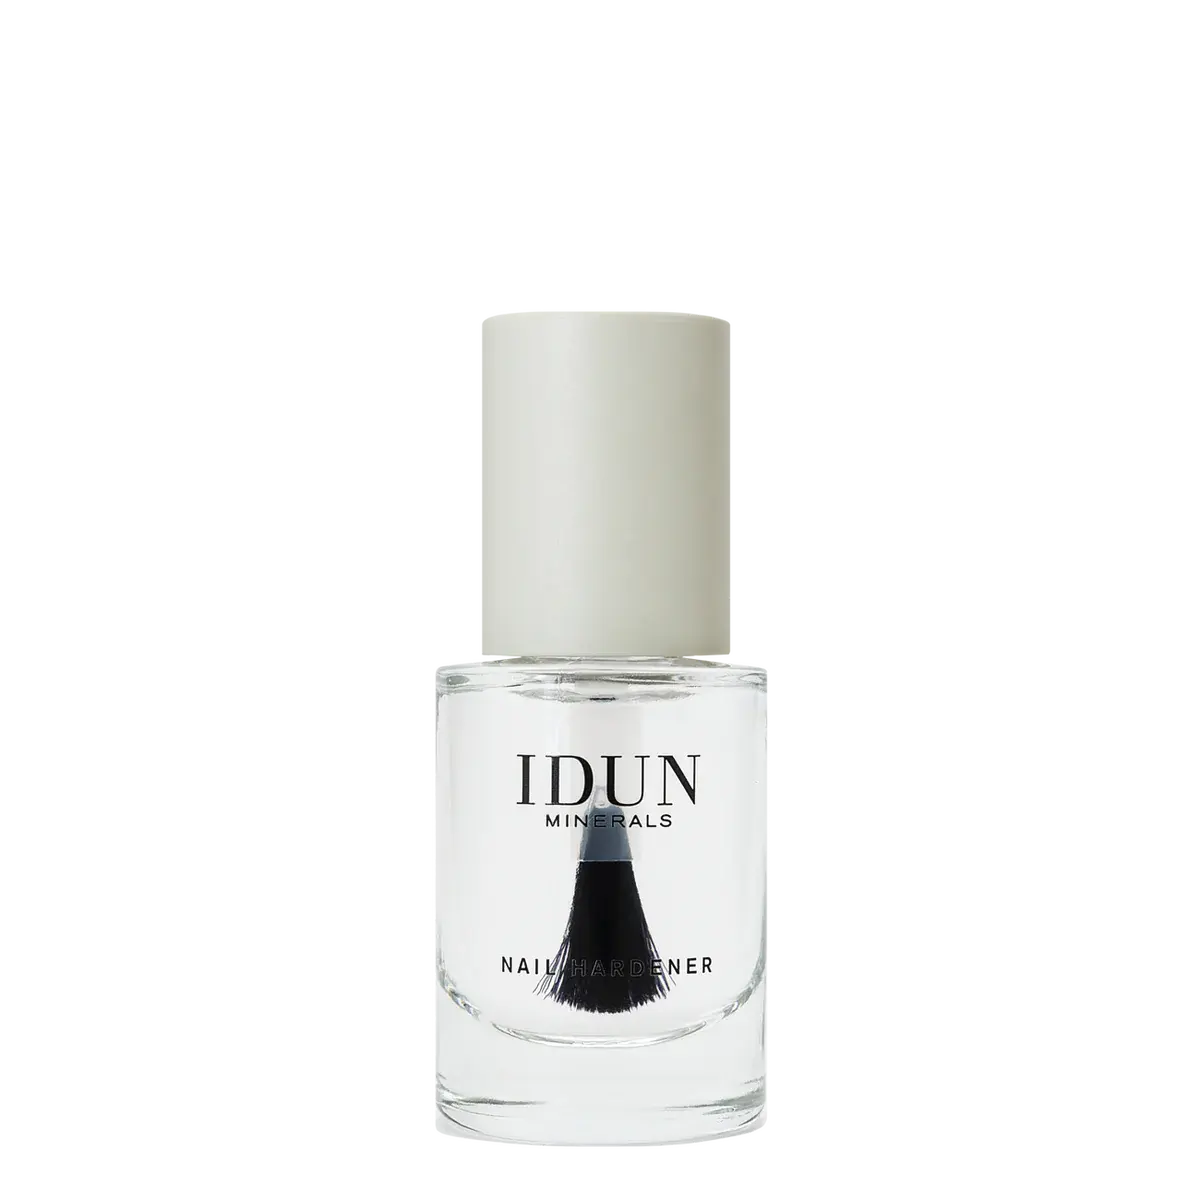 Se IDUN Minerals - Nail Hardener - 11 ml hos Duft og Natur